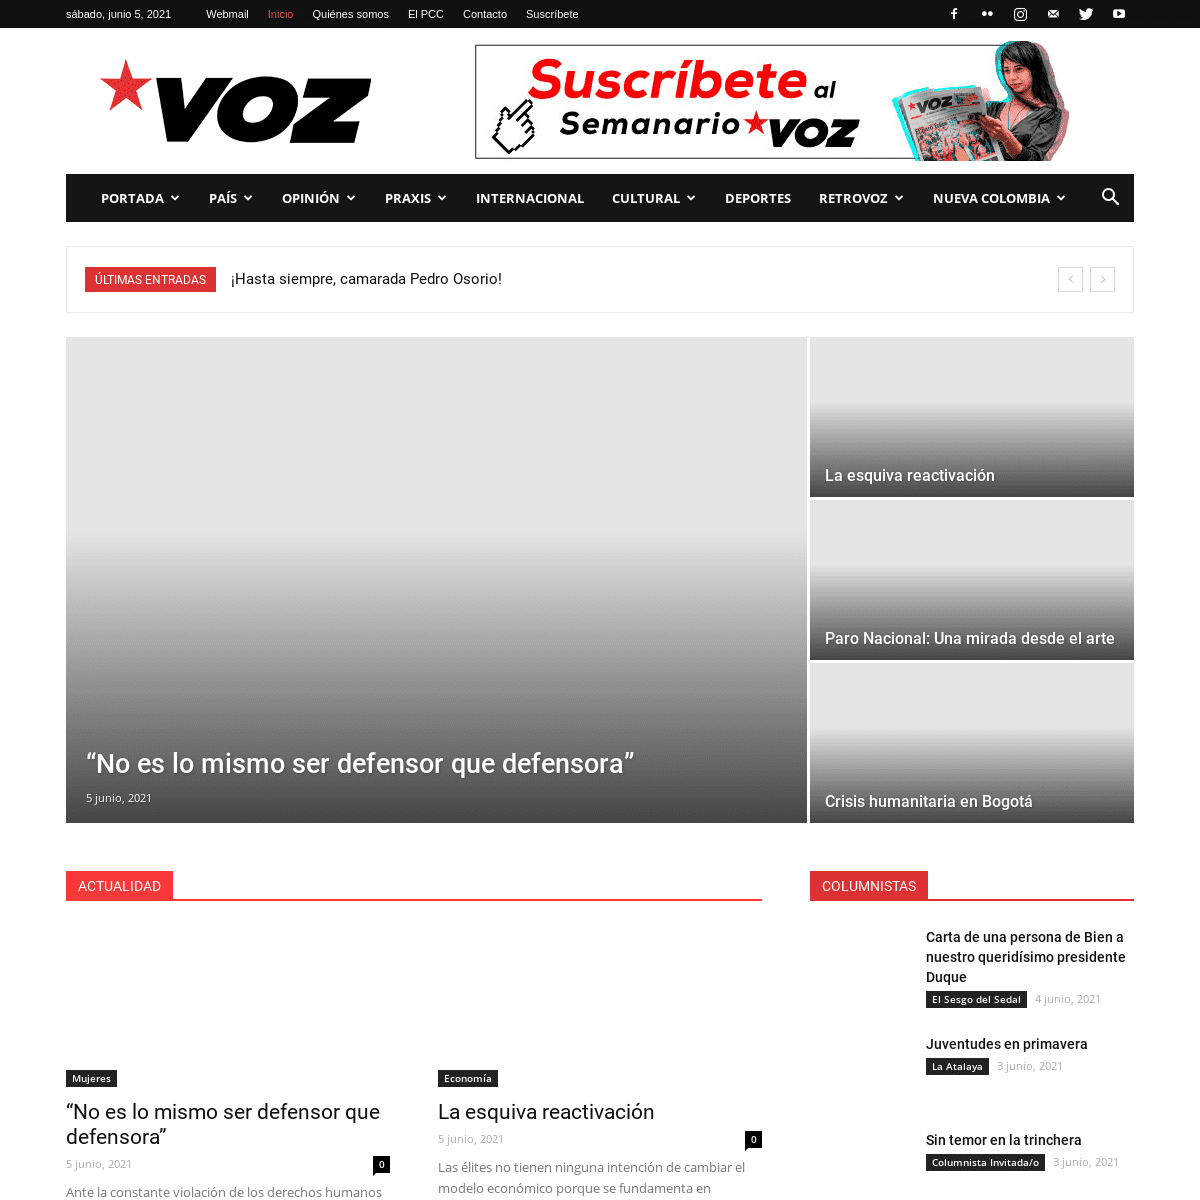 A complete backup of https://semanariovoz.com